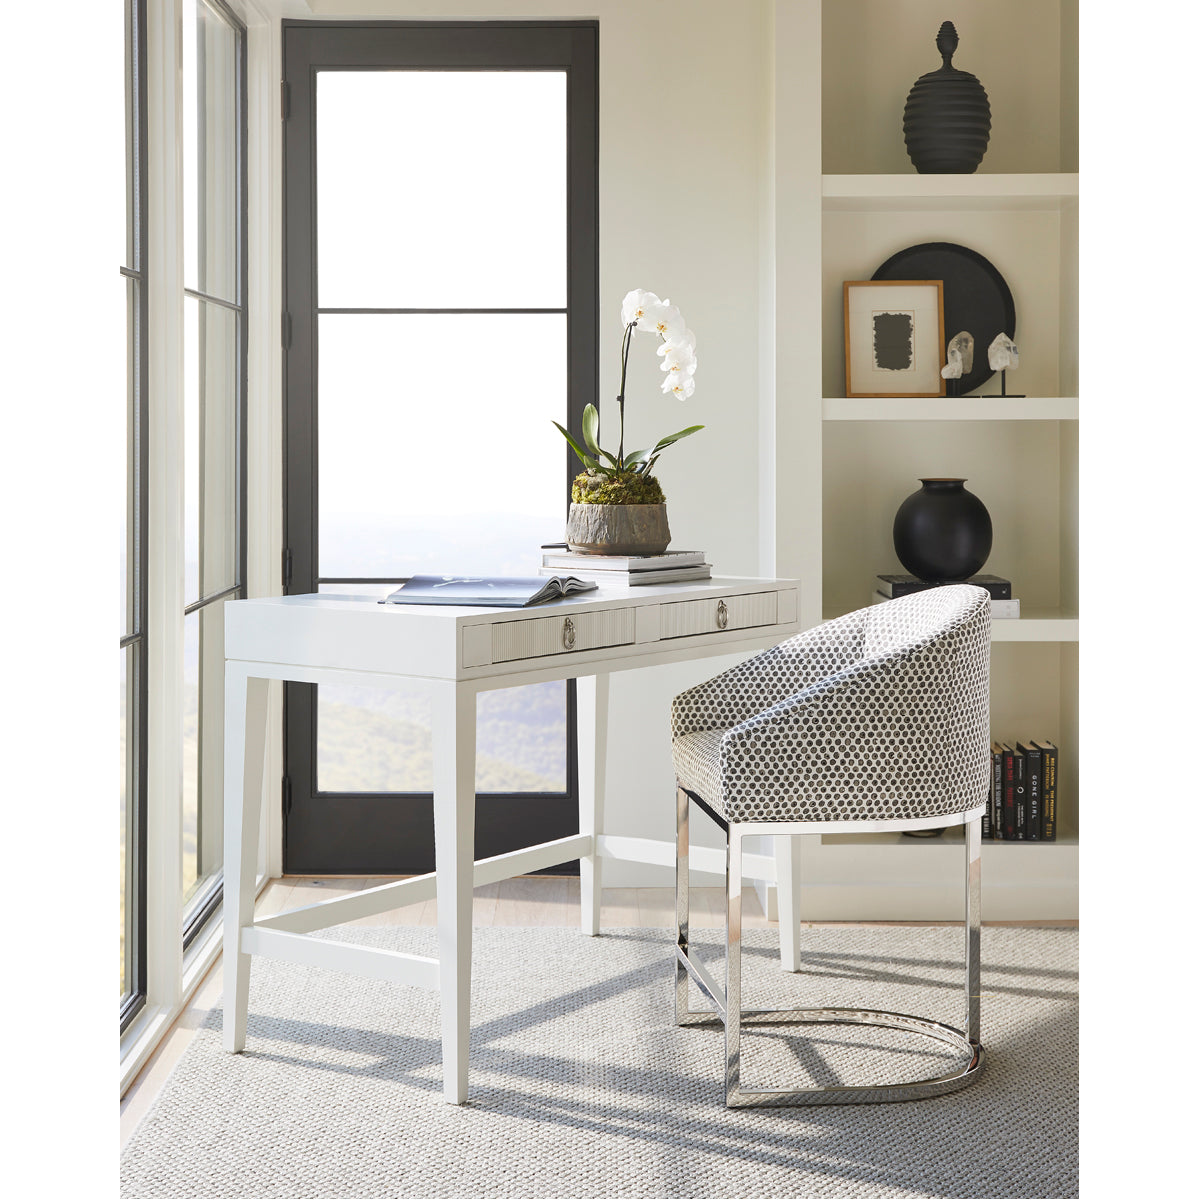 Vanguard Furniture Bryson Counter Height Desk with Taper Leg